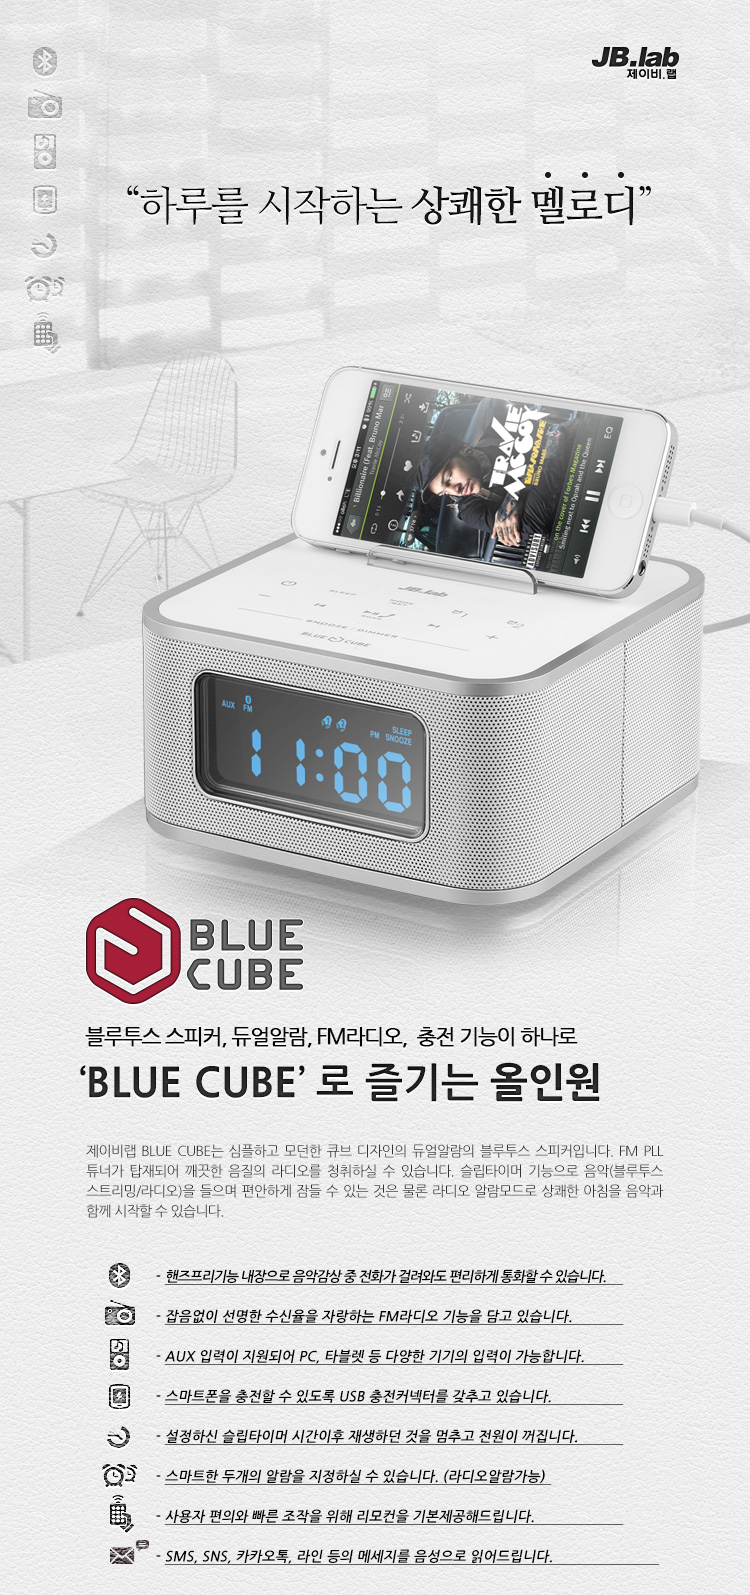 bluecube_01.jpg